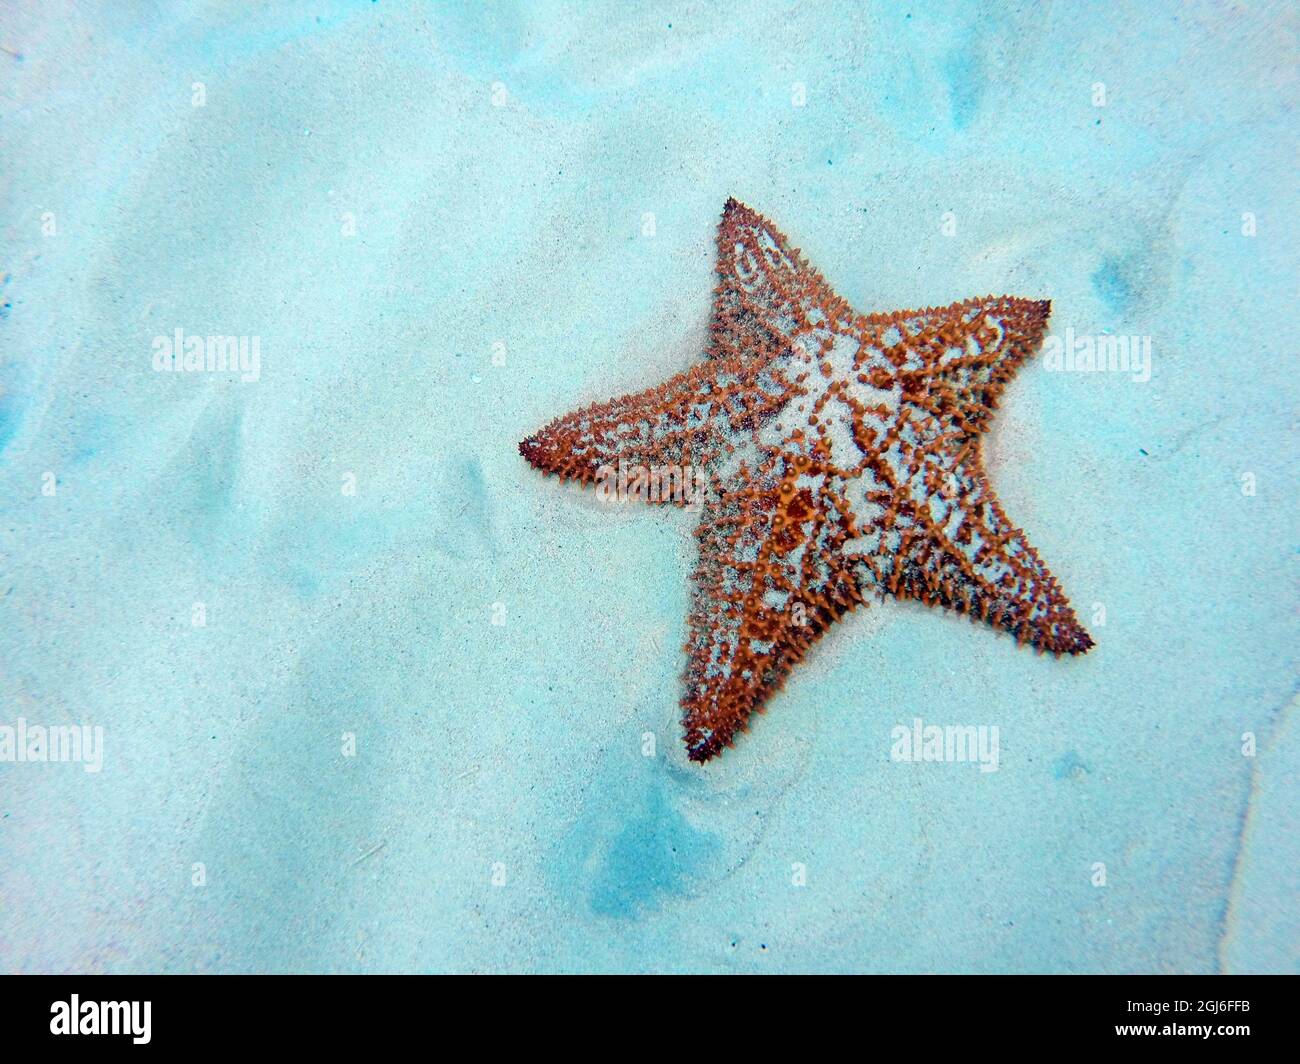 Caribbean, Barbados, Carlisle Bay. Red cushion sea star in sand. Stock Photo